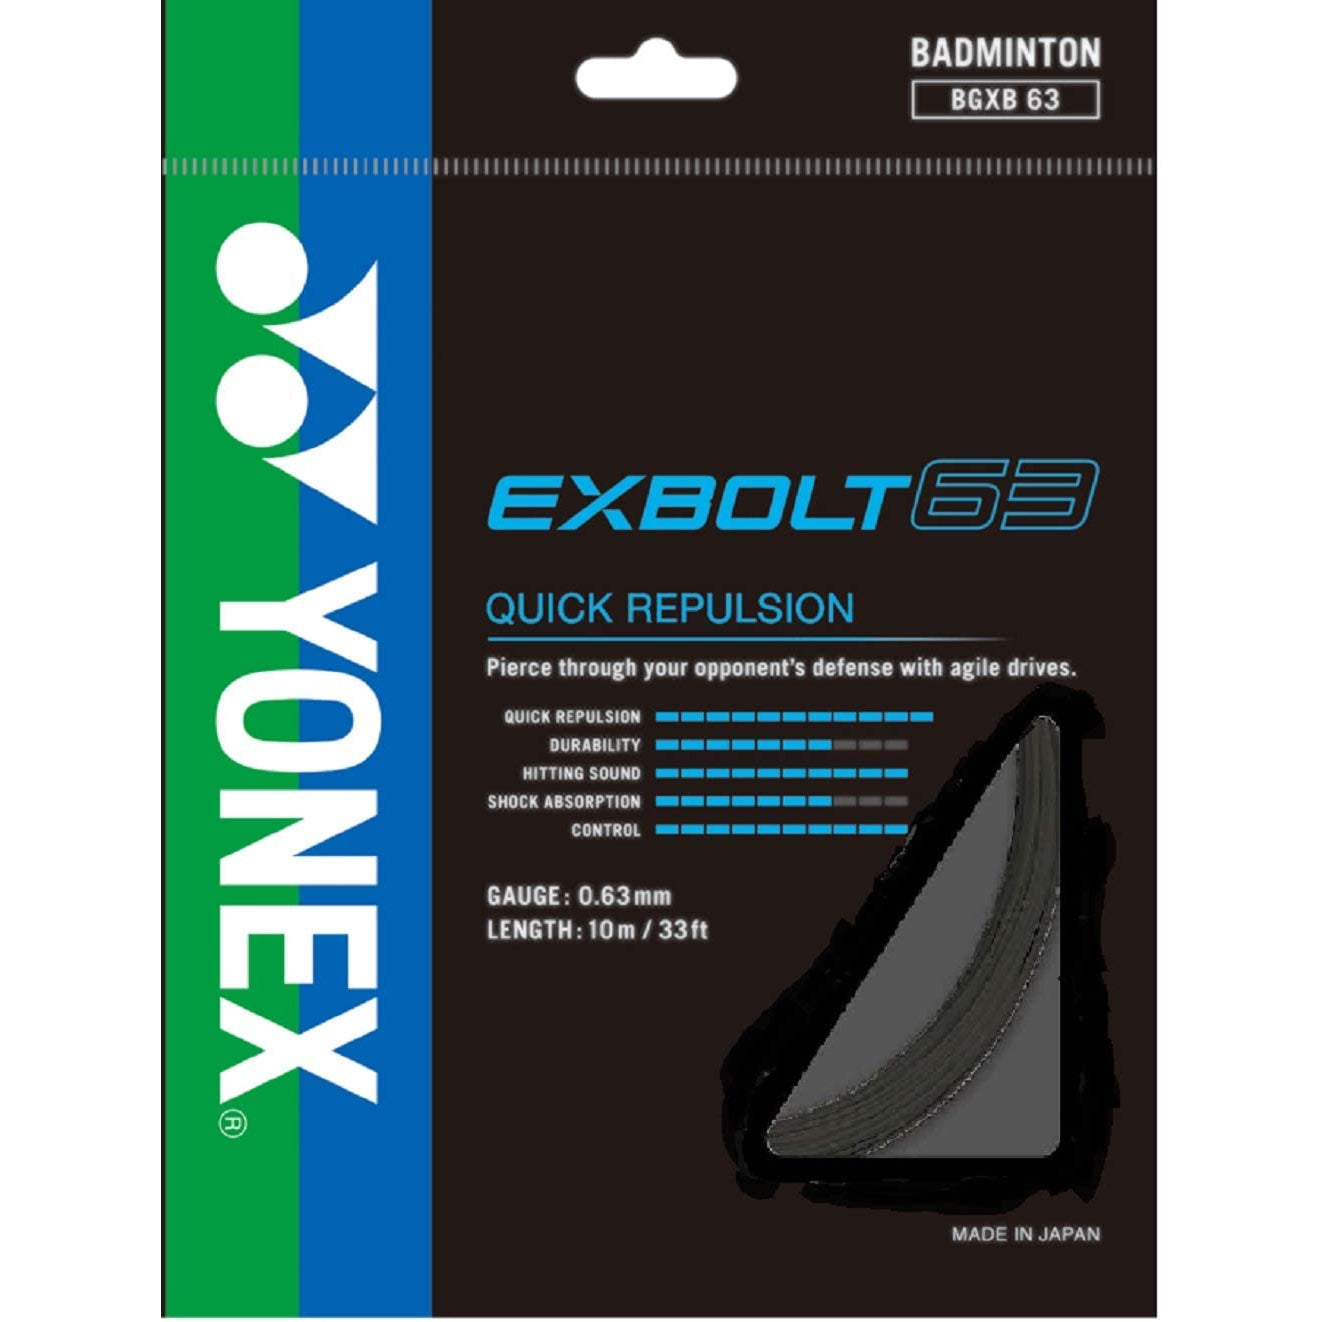 Yonex Exbolt63 Badminton String (Black) - Best Price online Prokicksports.com